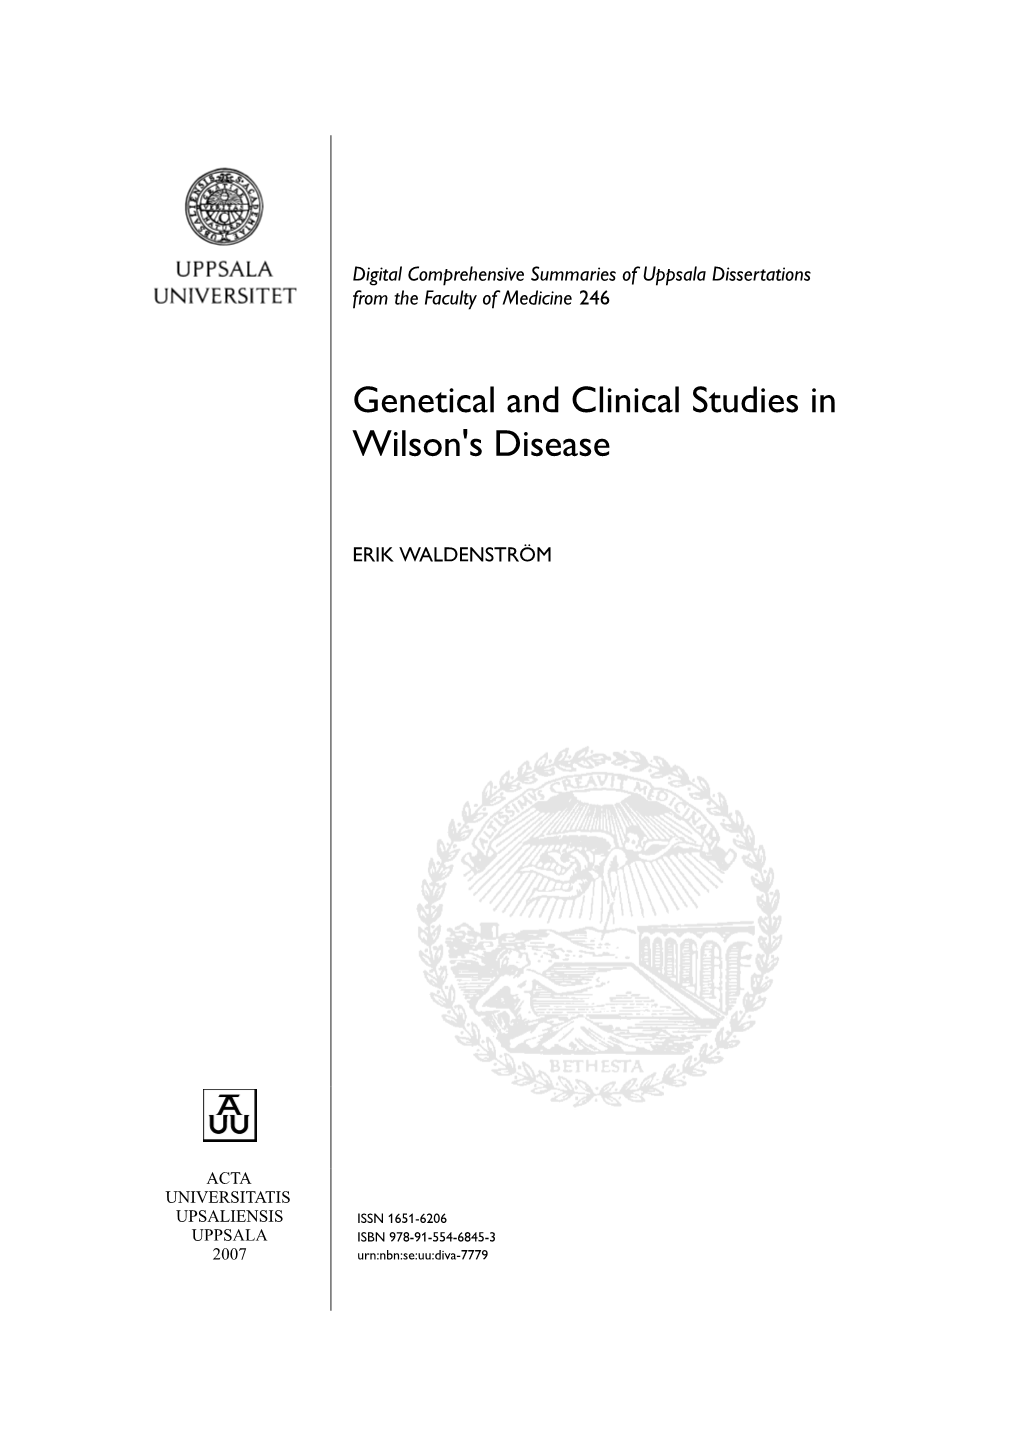 Genetical and Clinical Studies in Wilson's Disease